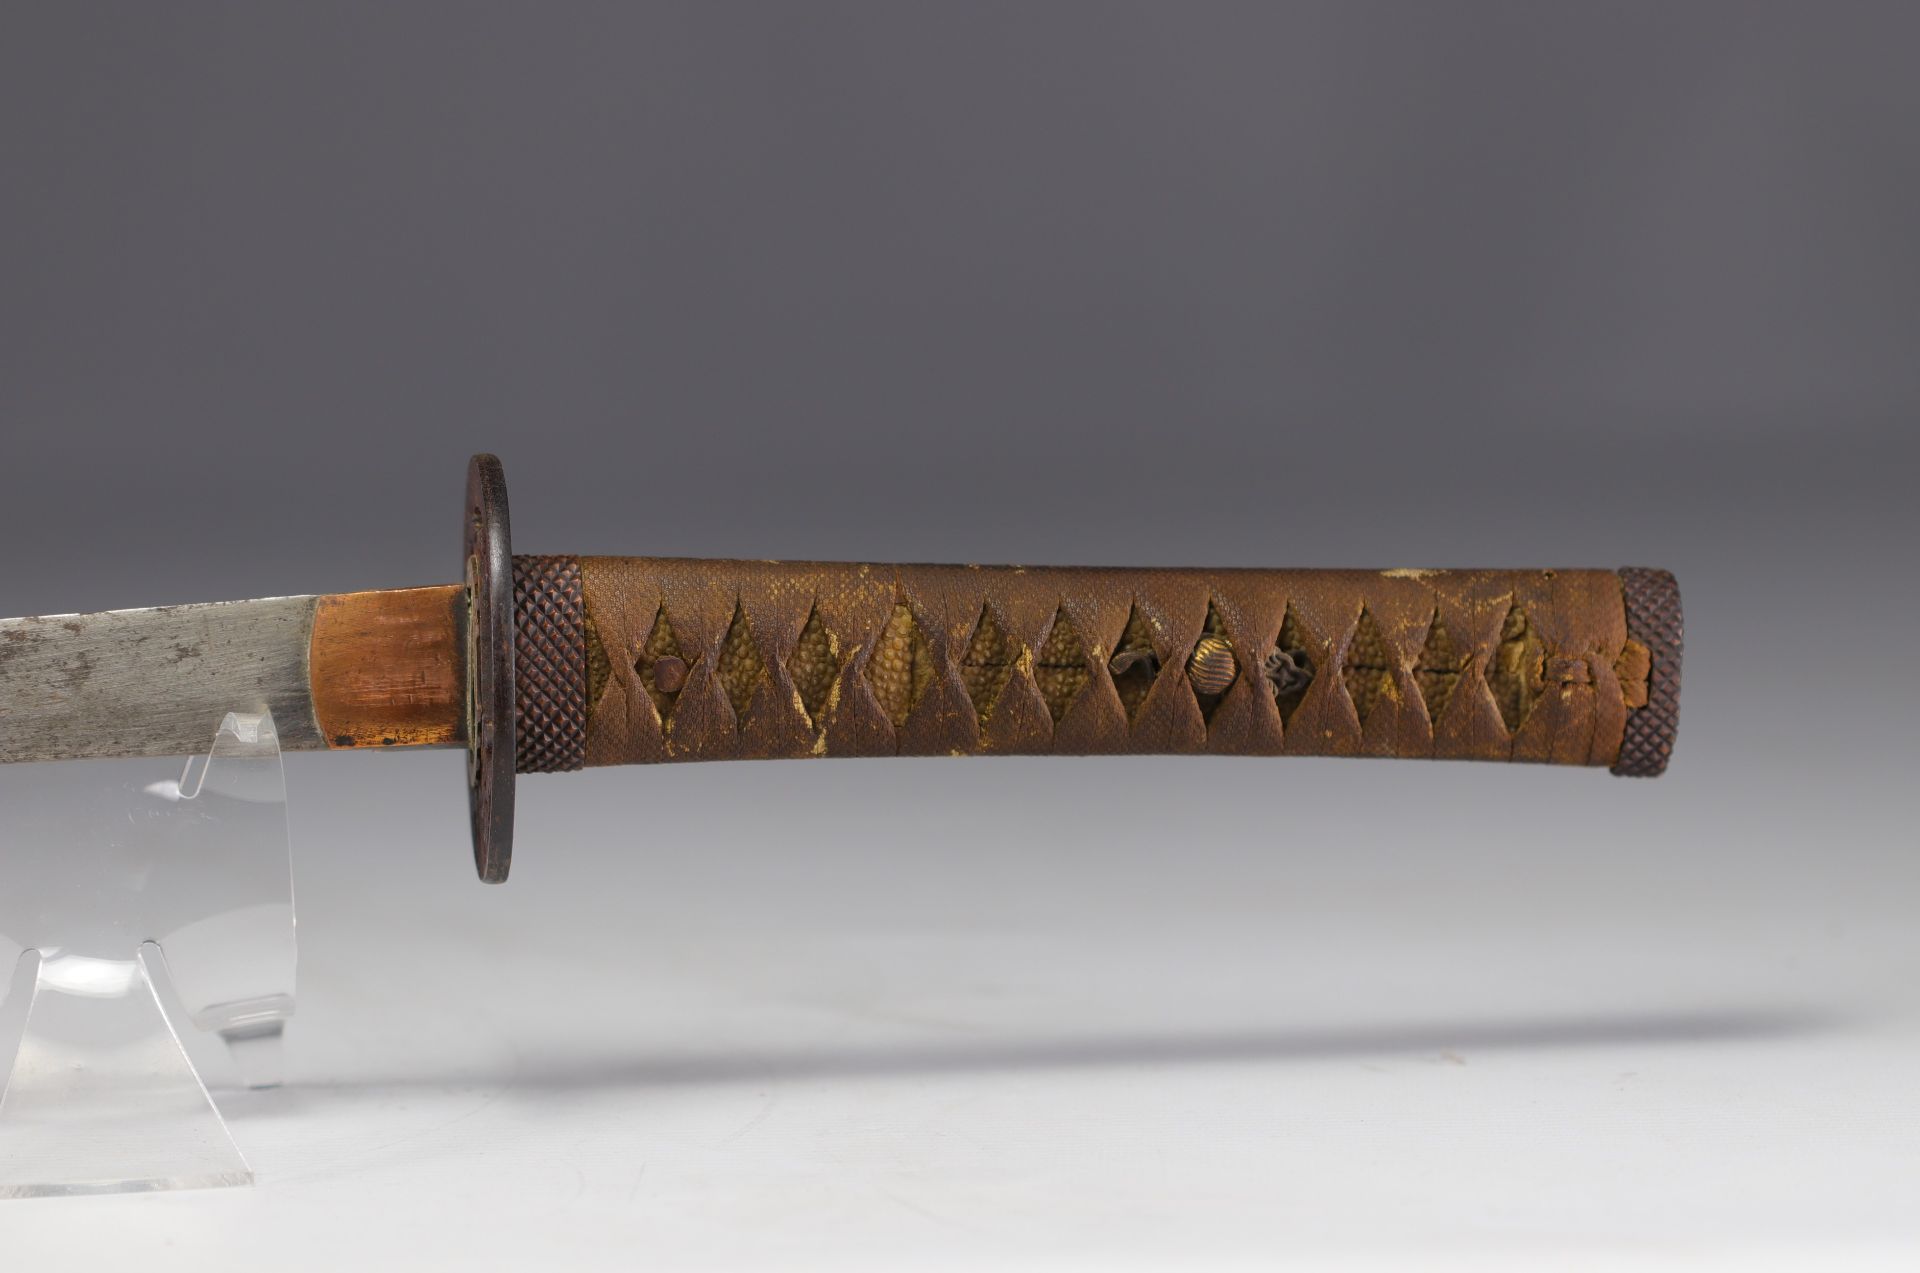 Japan - Set of two "Katanas" swords from Edo period. - Image 5 of 6